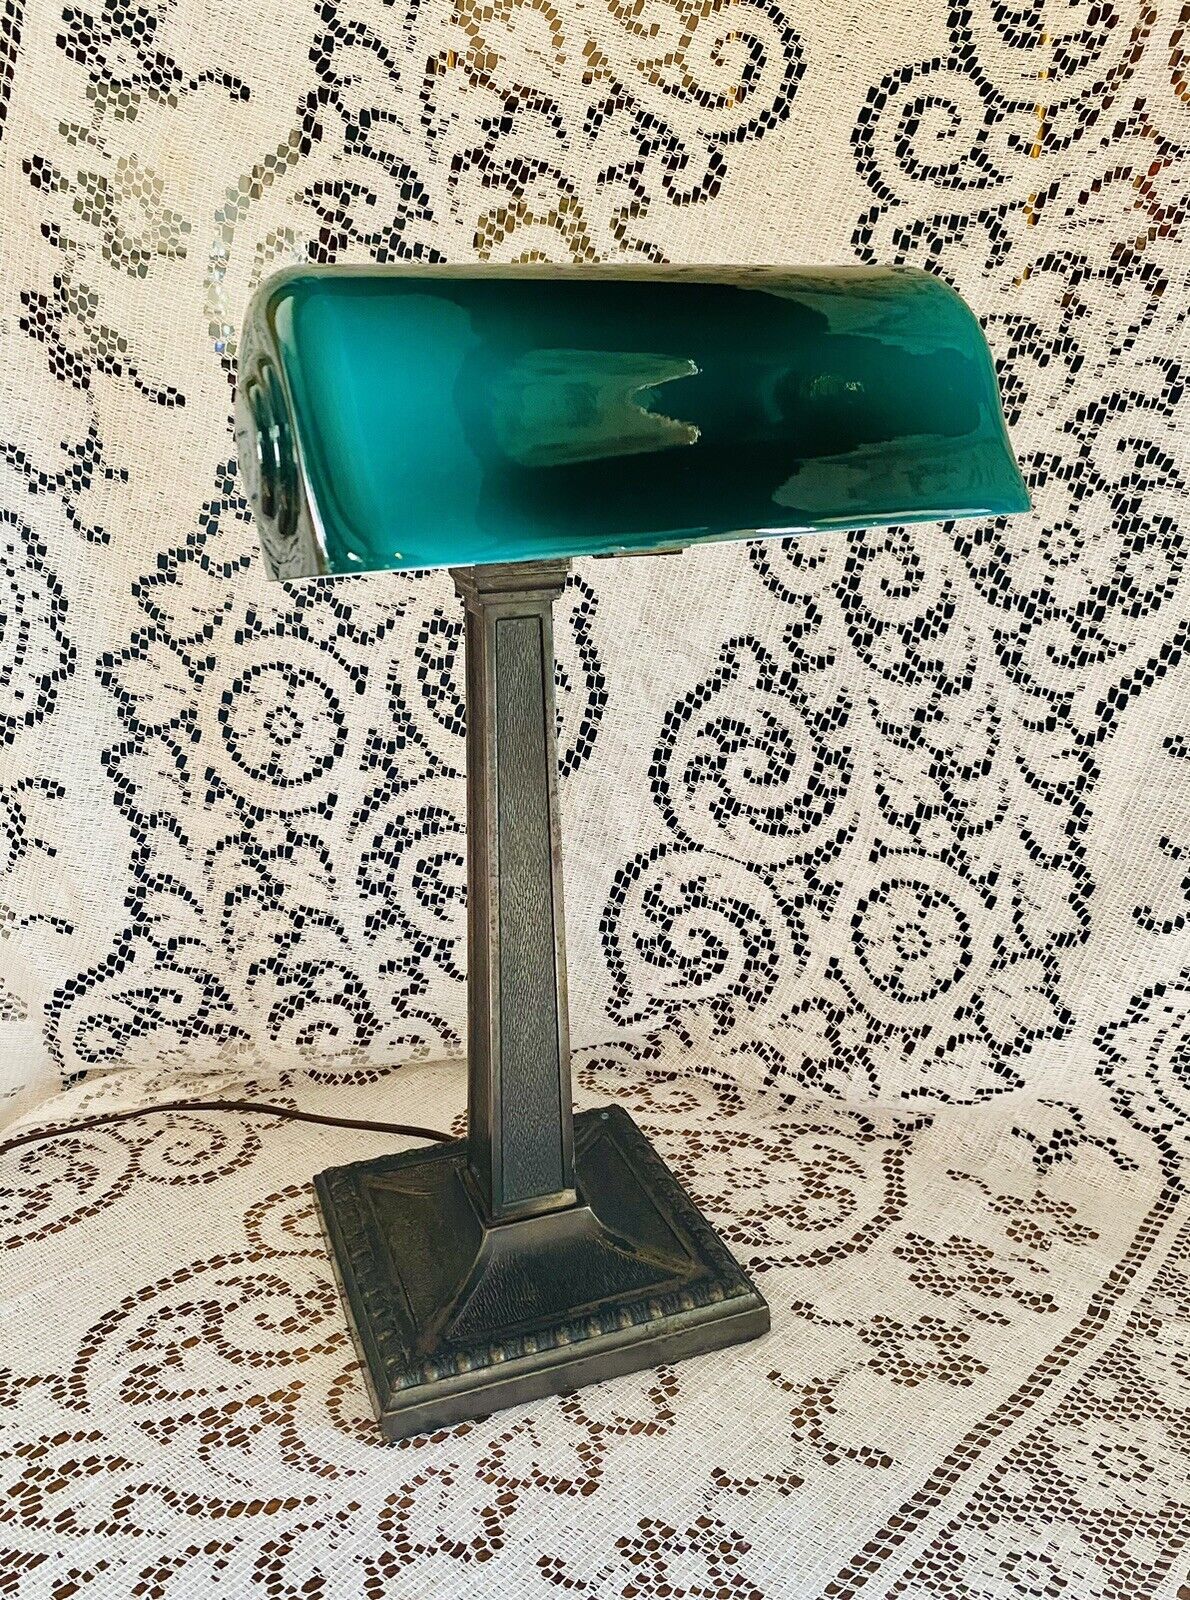 Genuine 1917 Antique Original Verdelite Brass Bankers Lamp Green Glass Shade